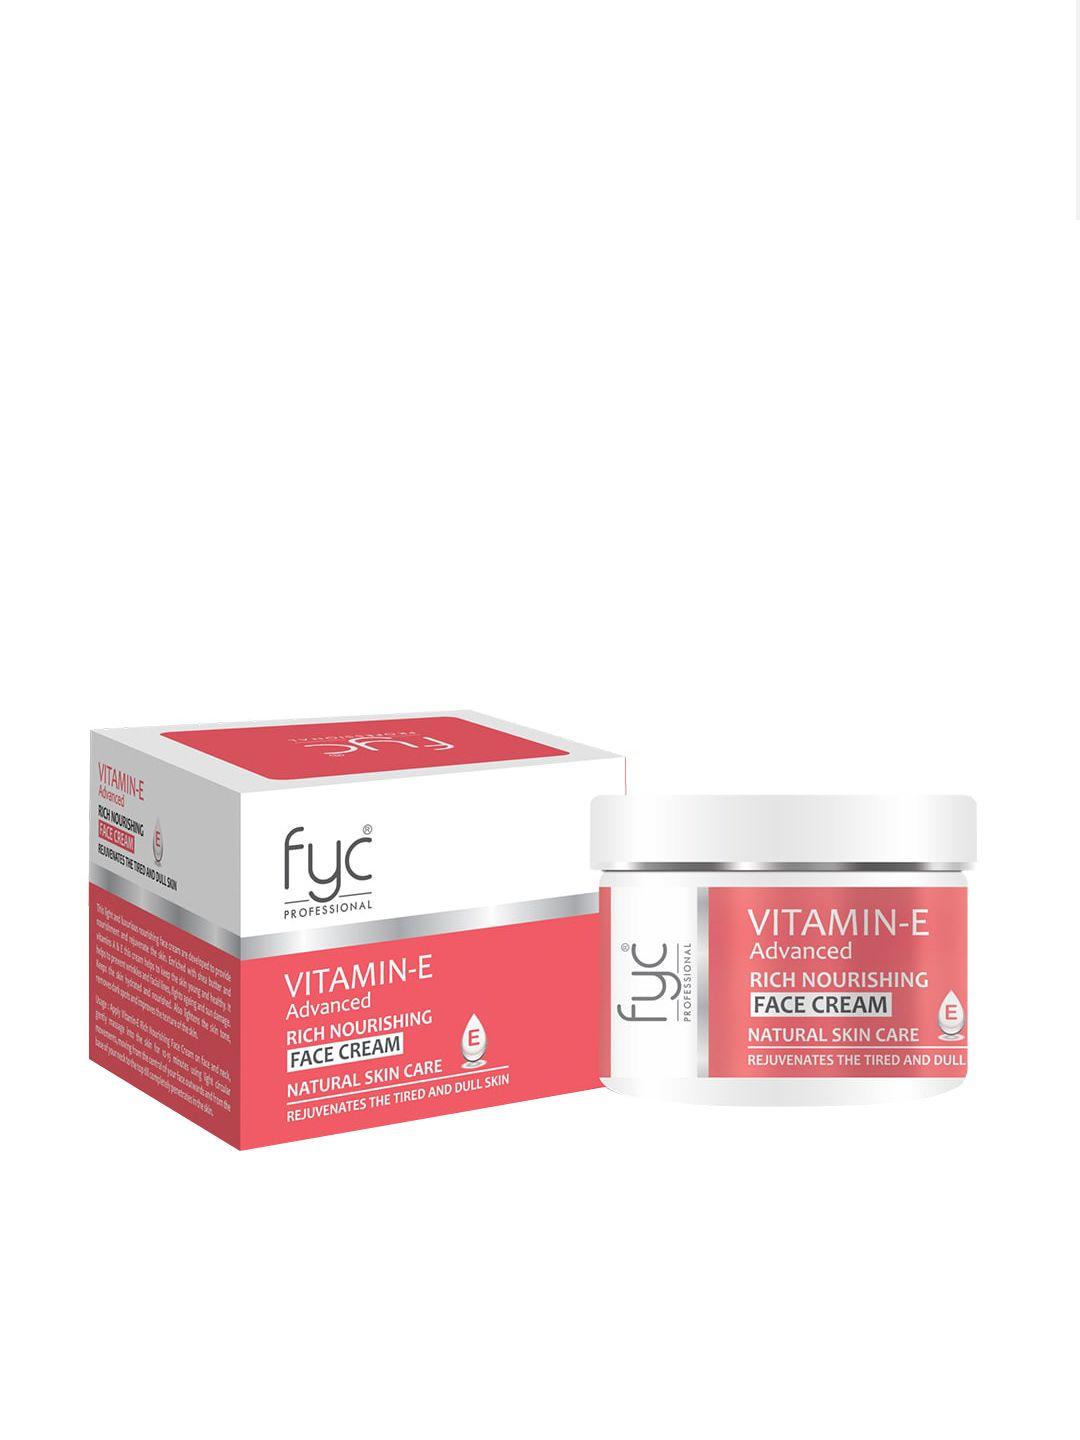 fyc profesttional vitamin - e advanced rich nourishing face cream 250g